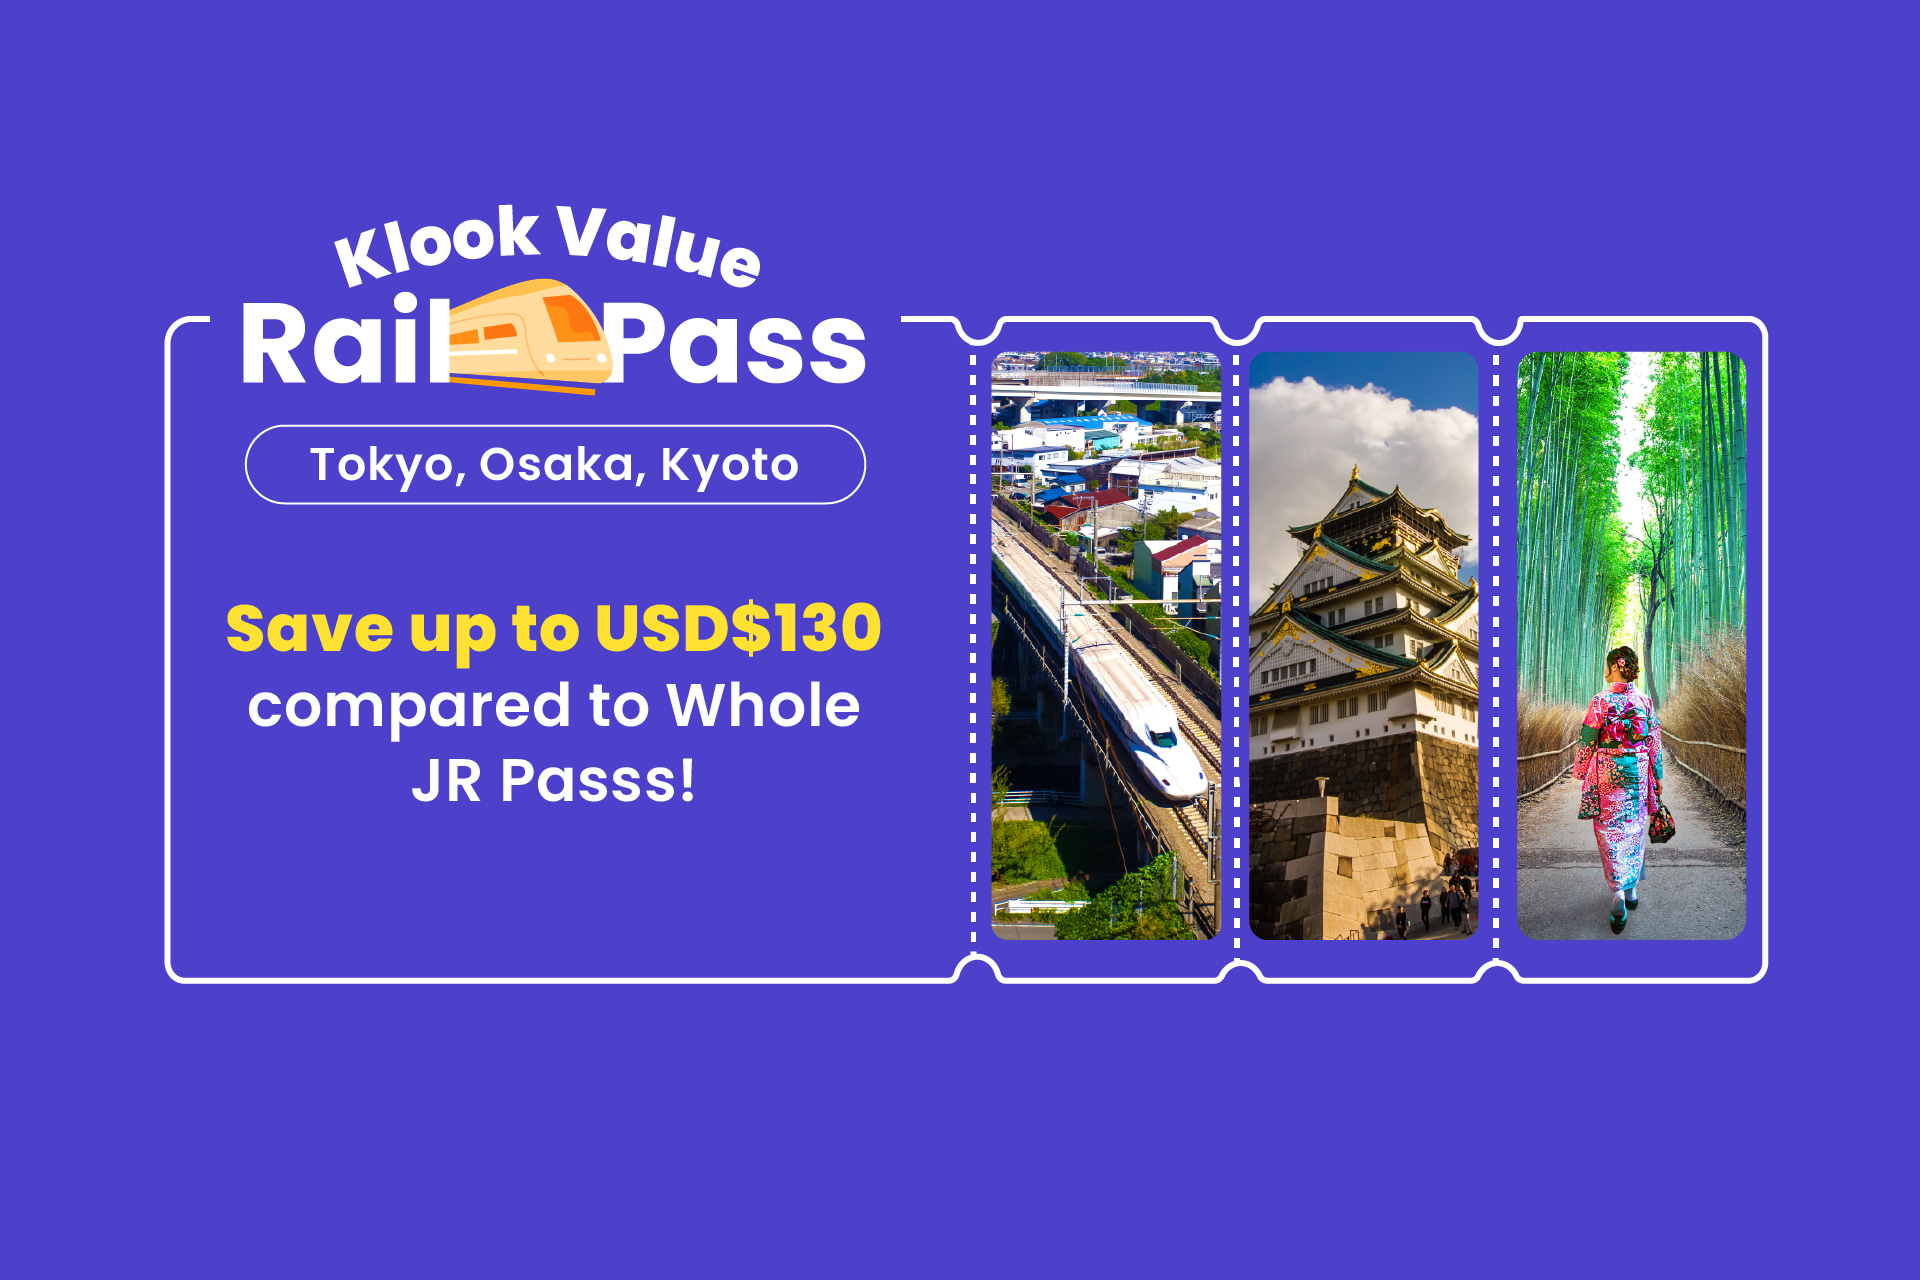 Klook Value Rail Pass: Tokyo, Osaka, Kyoto Edition